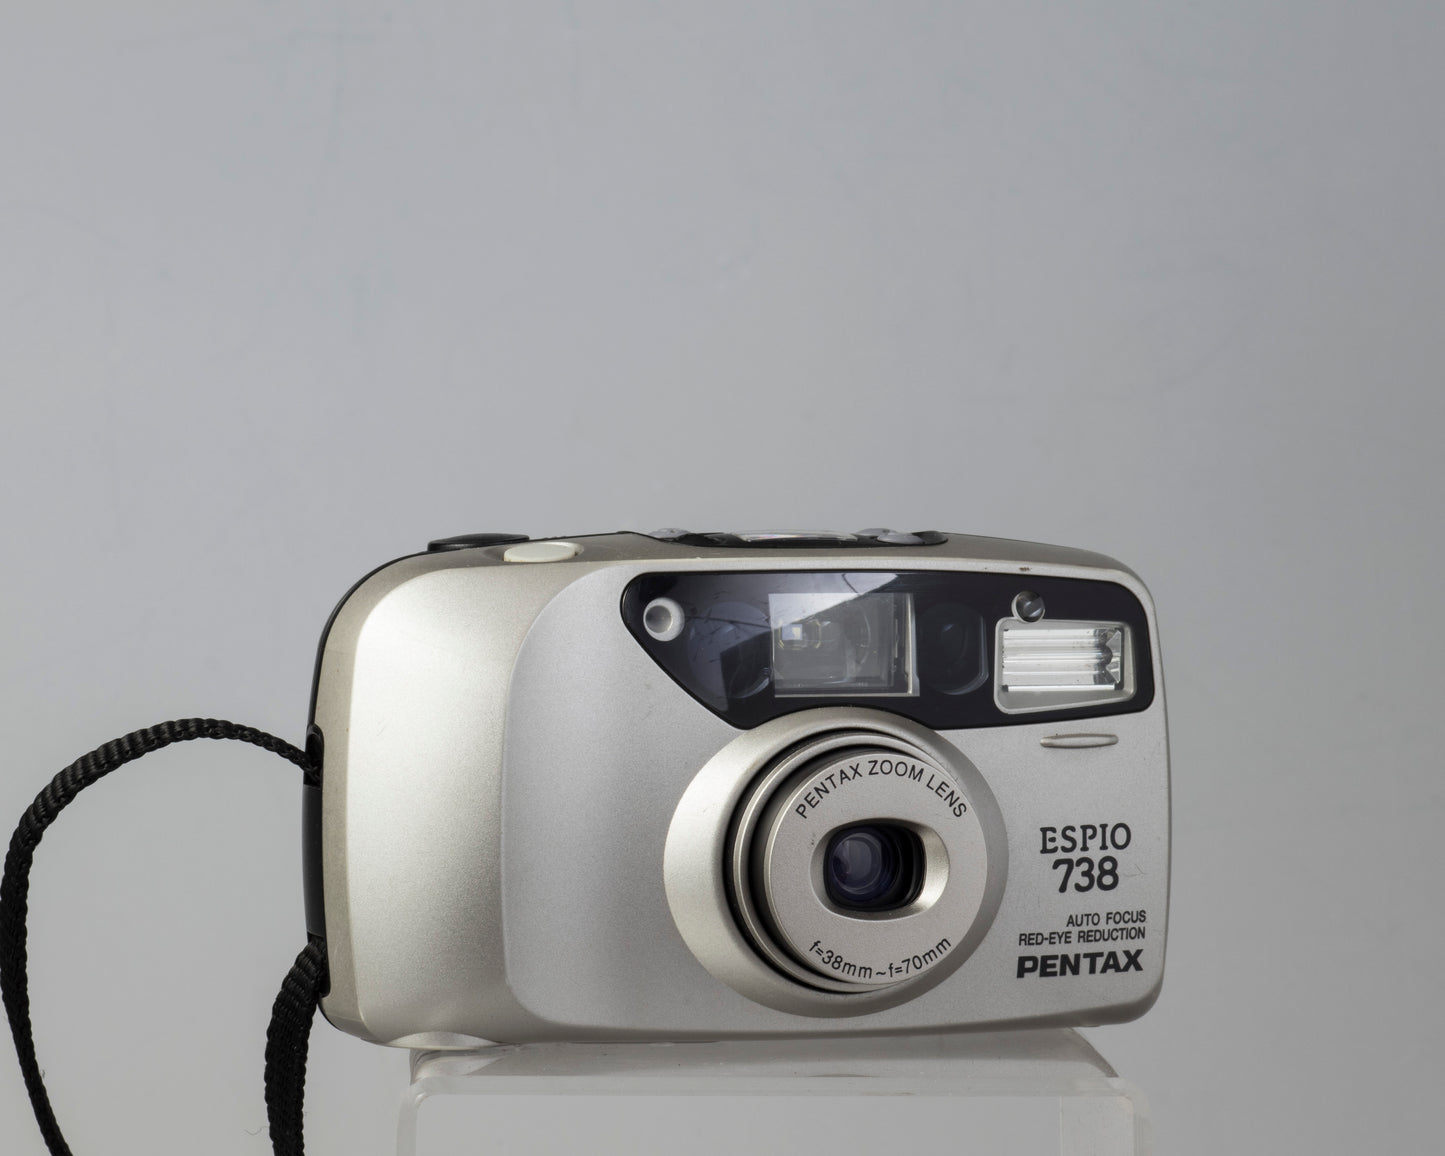 The Pentax Espio 738 compact 35mm film camera